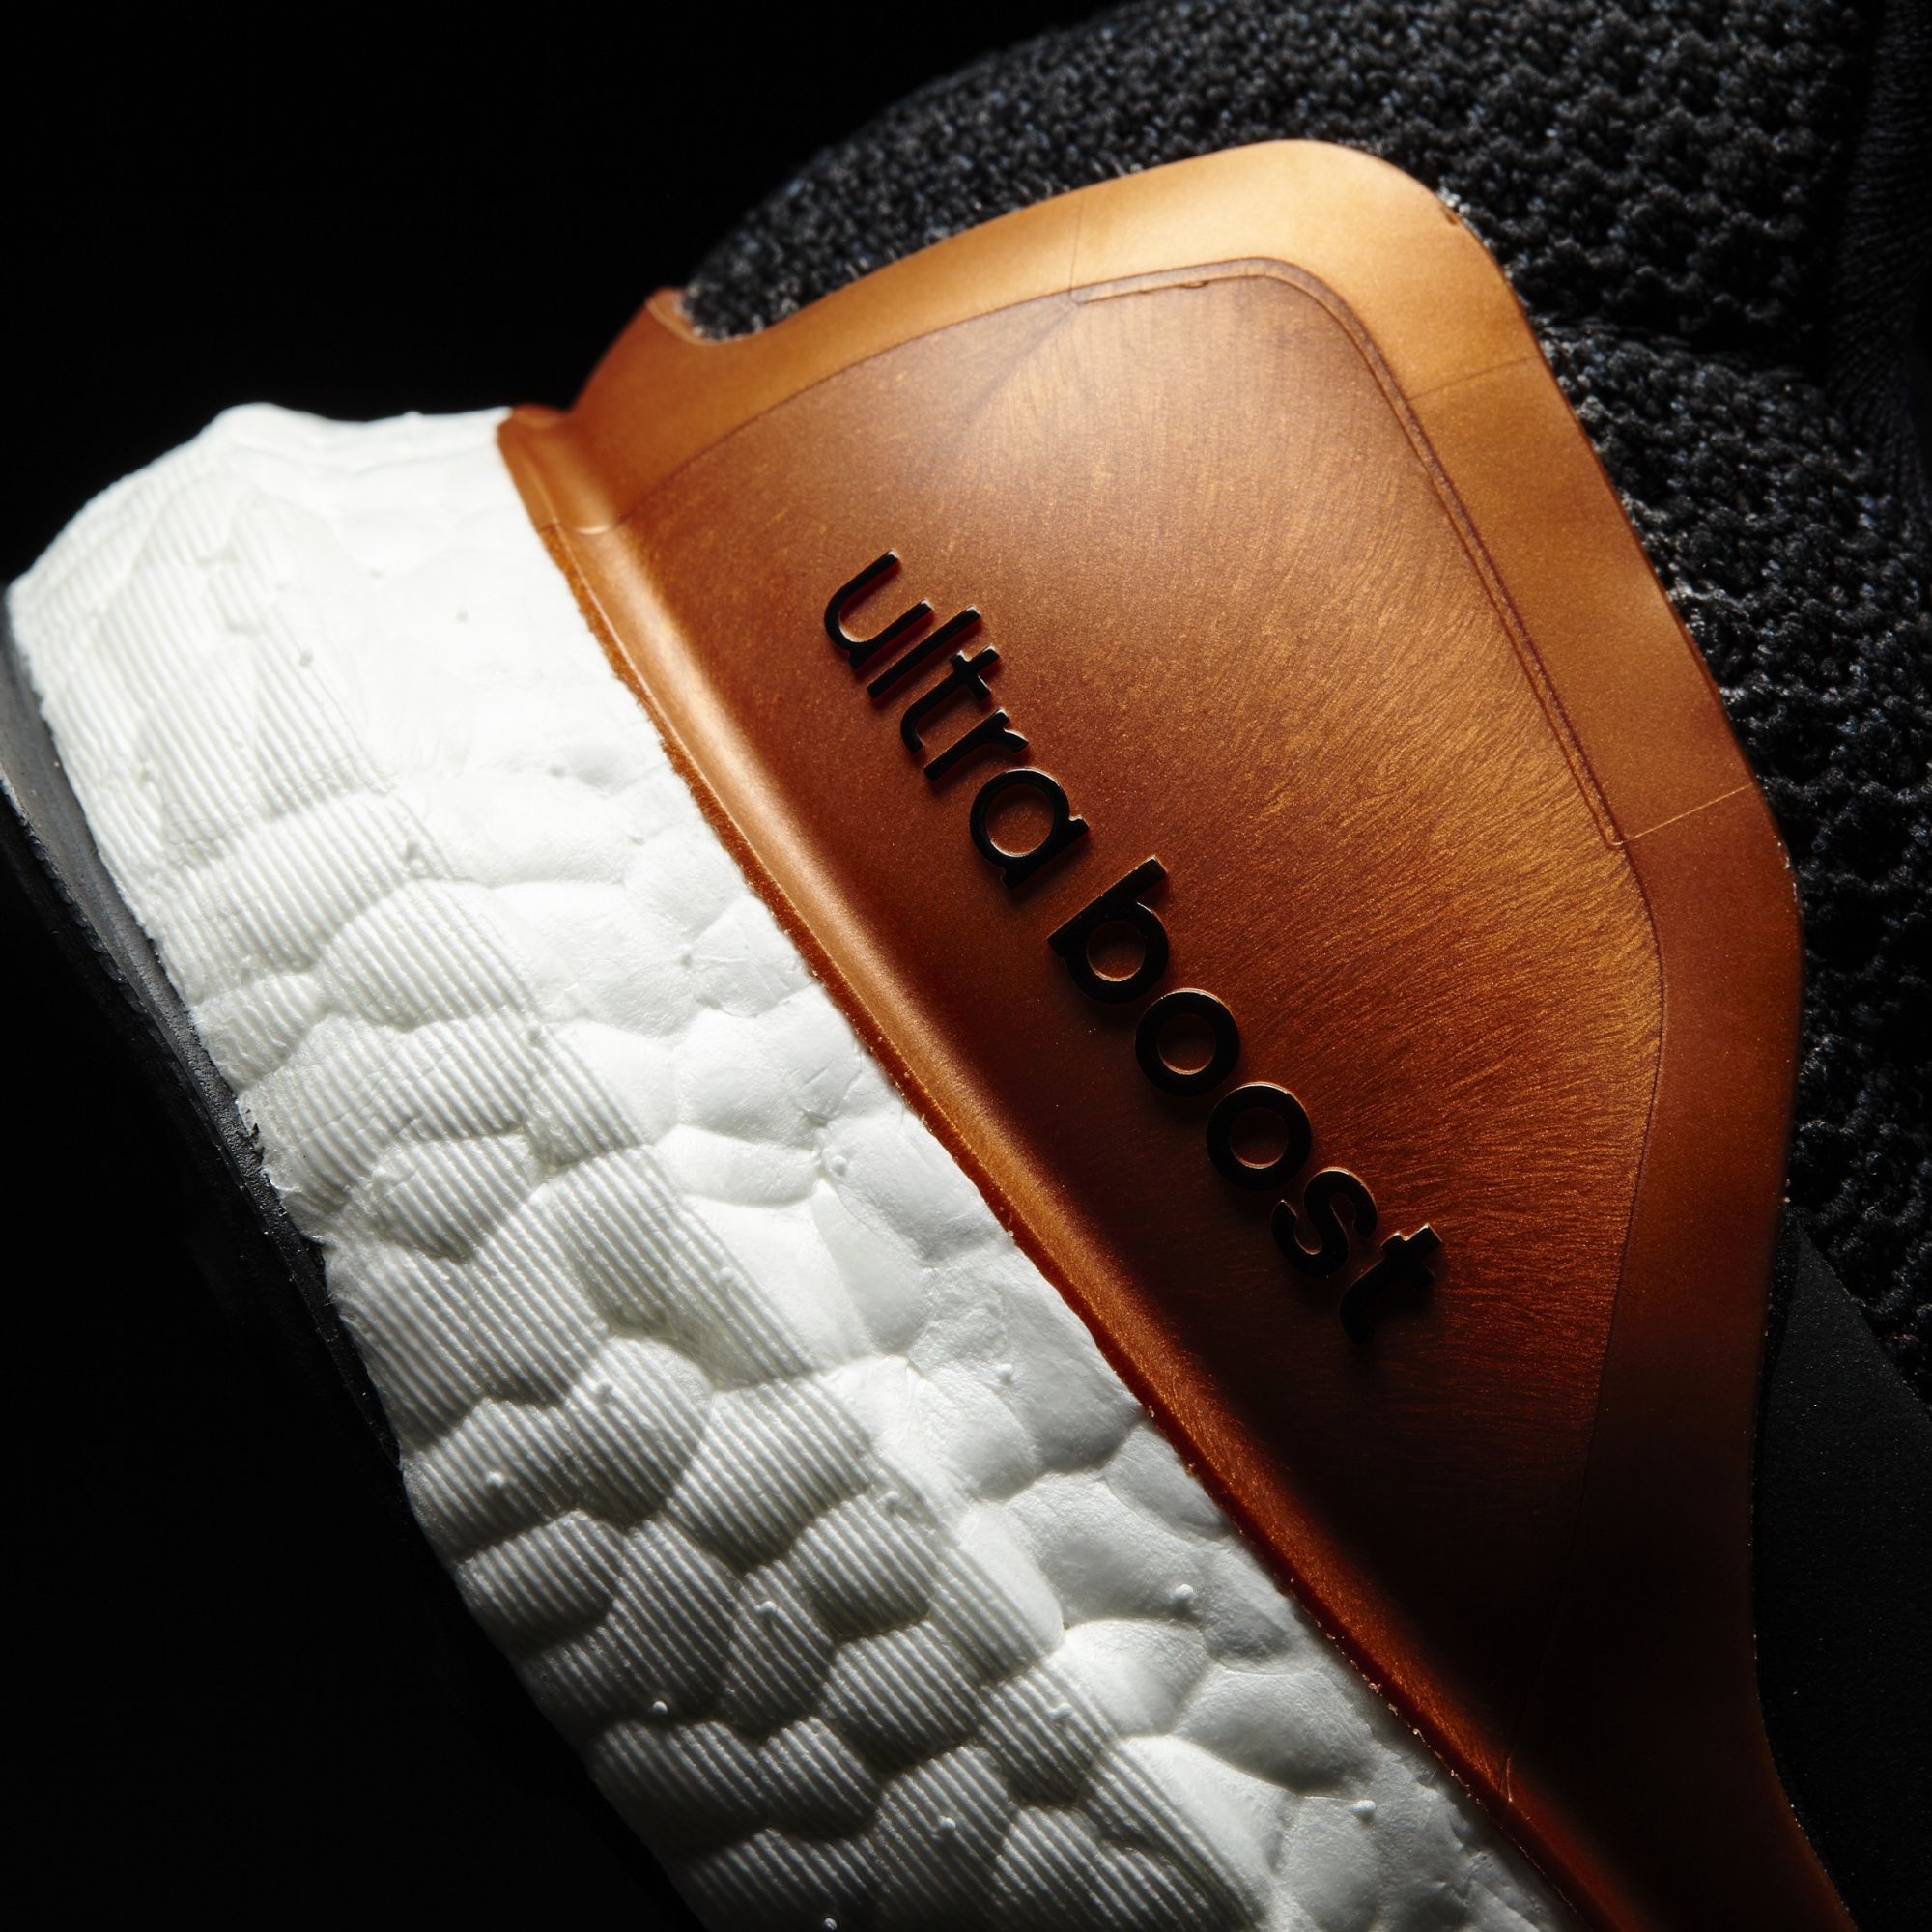 Adidas Ultra Boost LTD
Core Black / Bronze